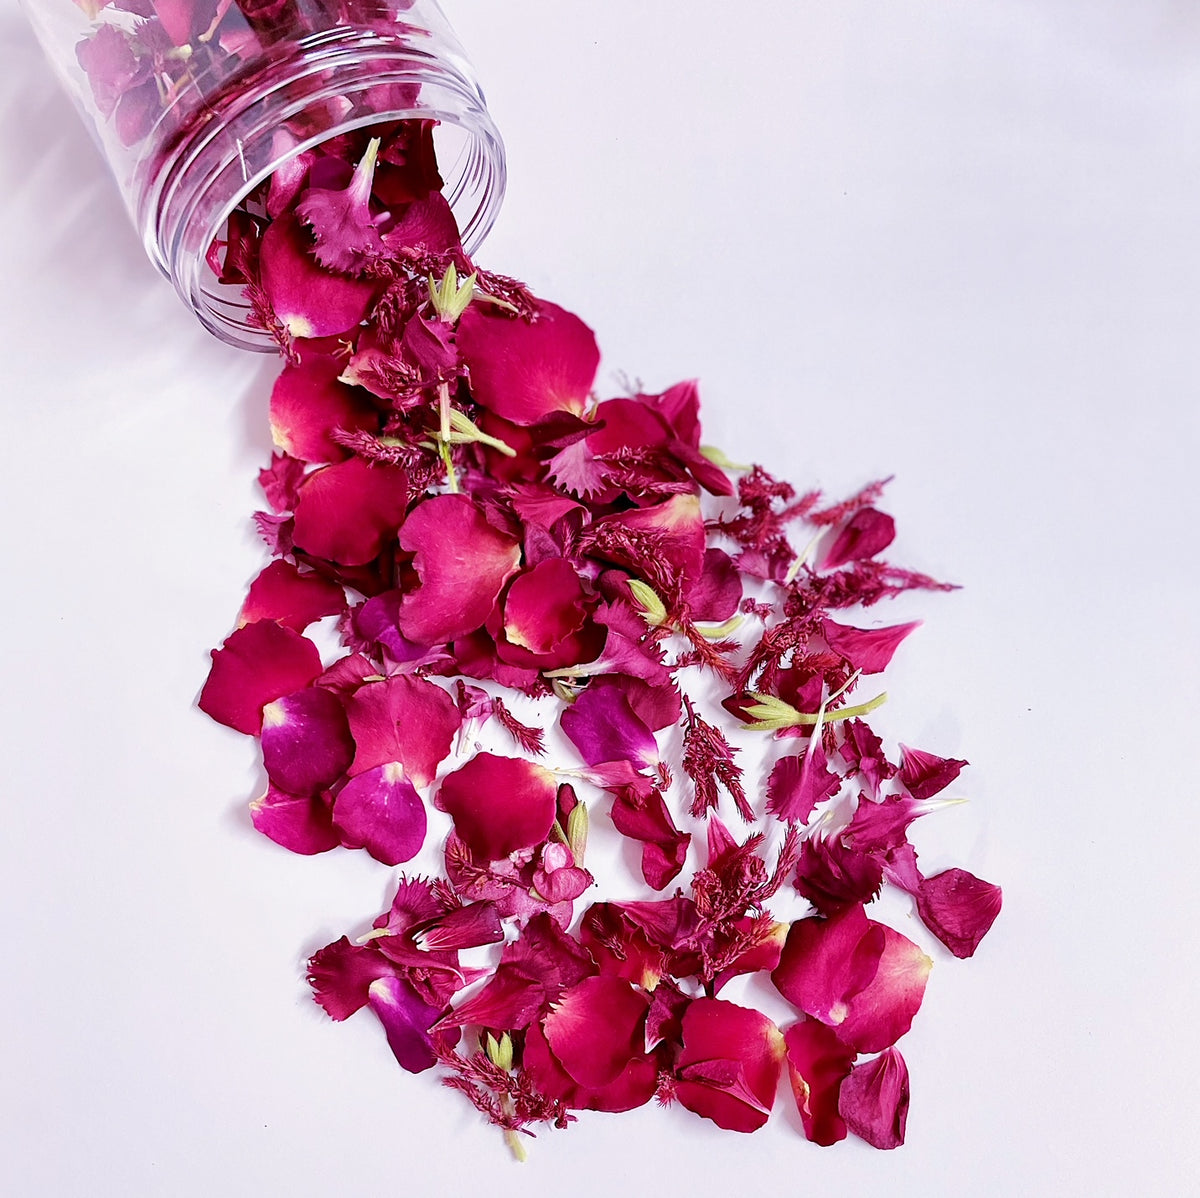 RED VALENTINE FLOWERFETTI® - Freeze Dried Edible Flower Confetti